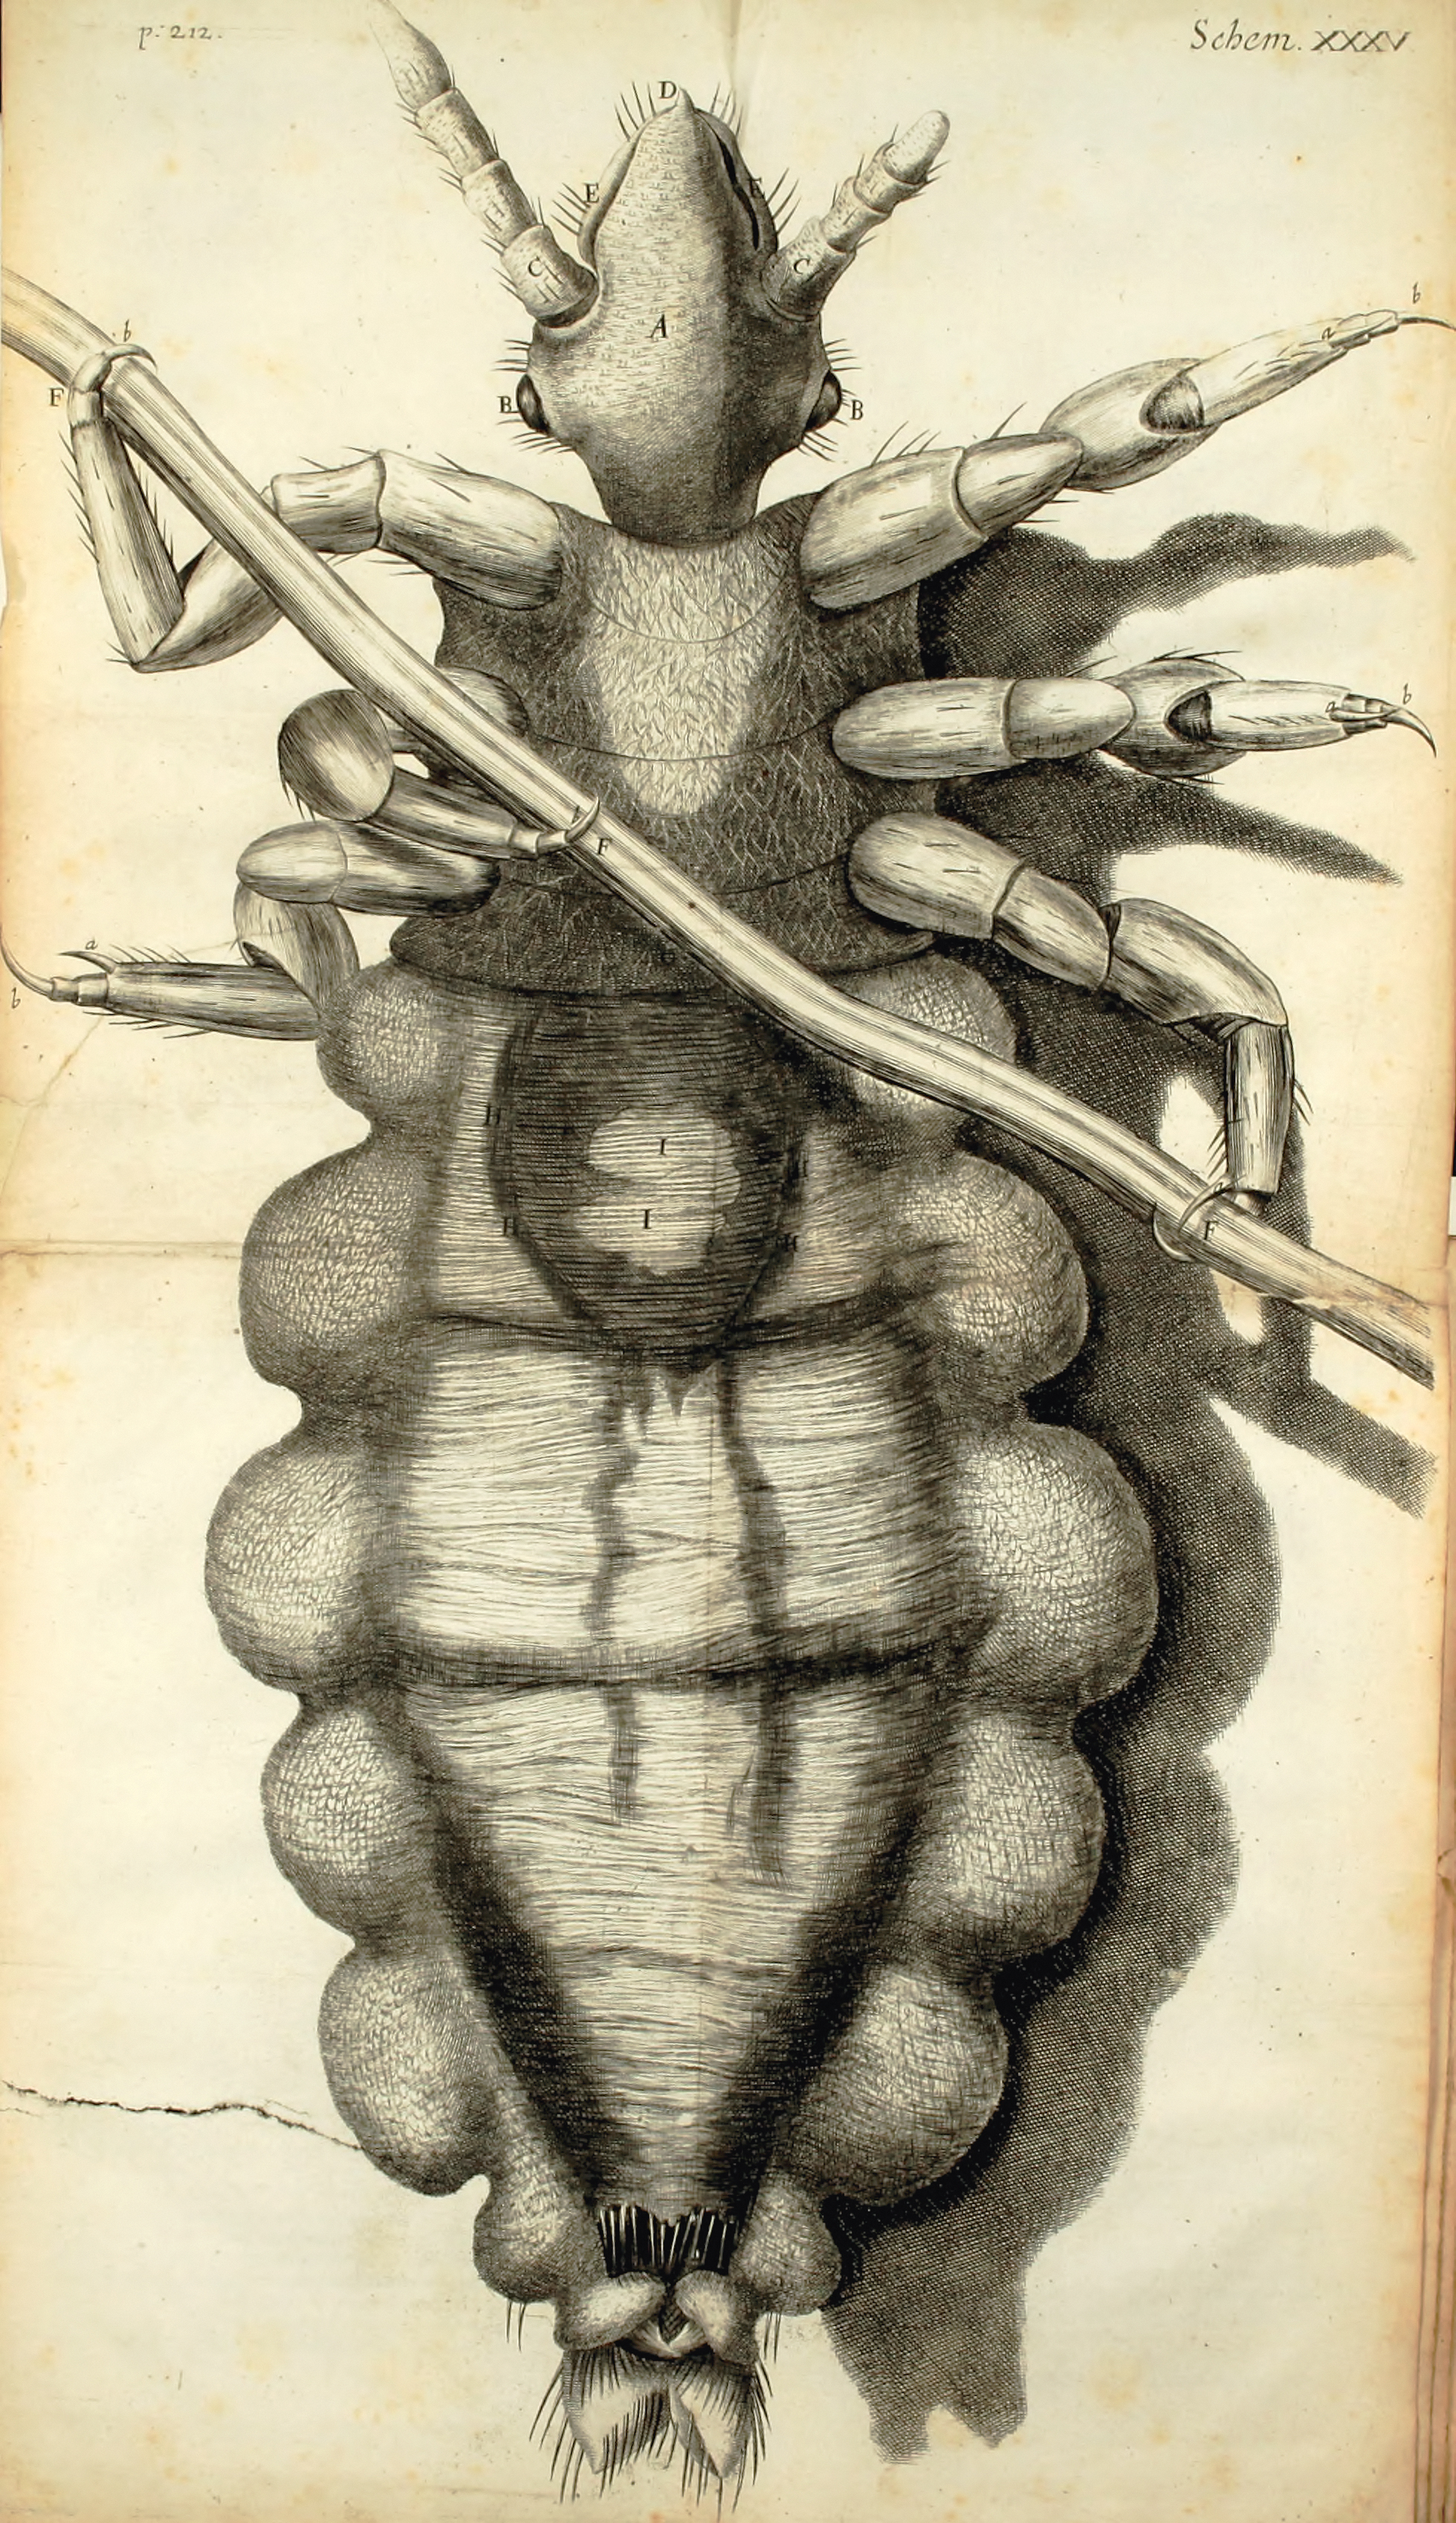 Robert Hooke, The Louse, from Micrographia,1665, Duke University Libraries, Durham, NC